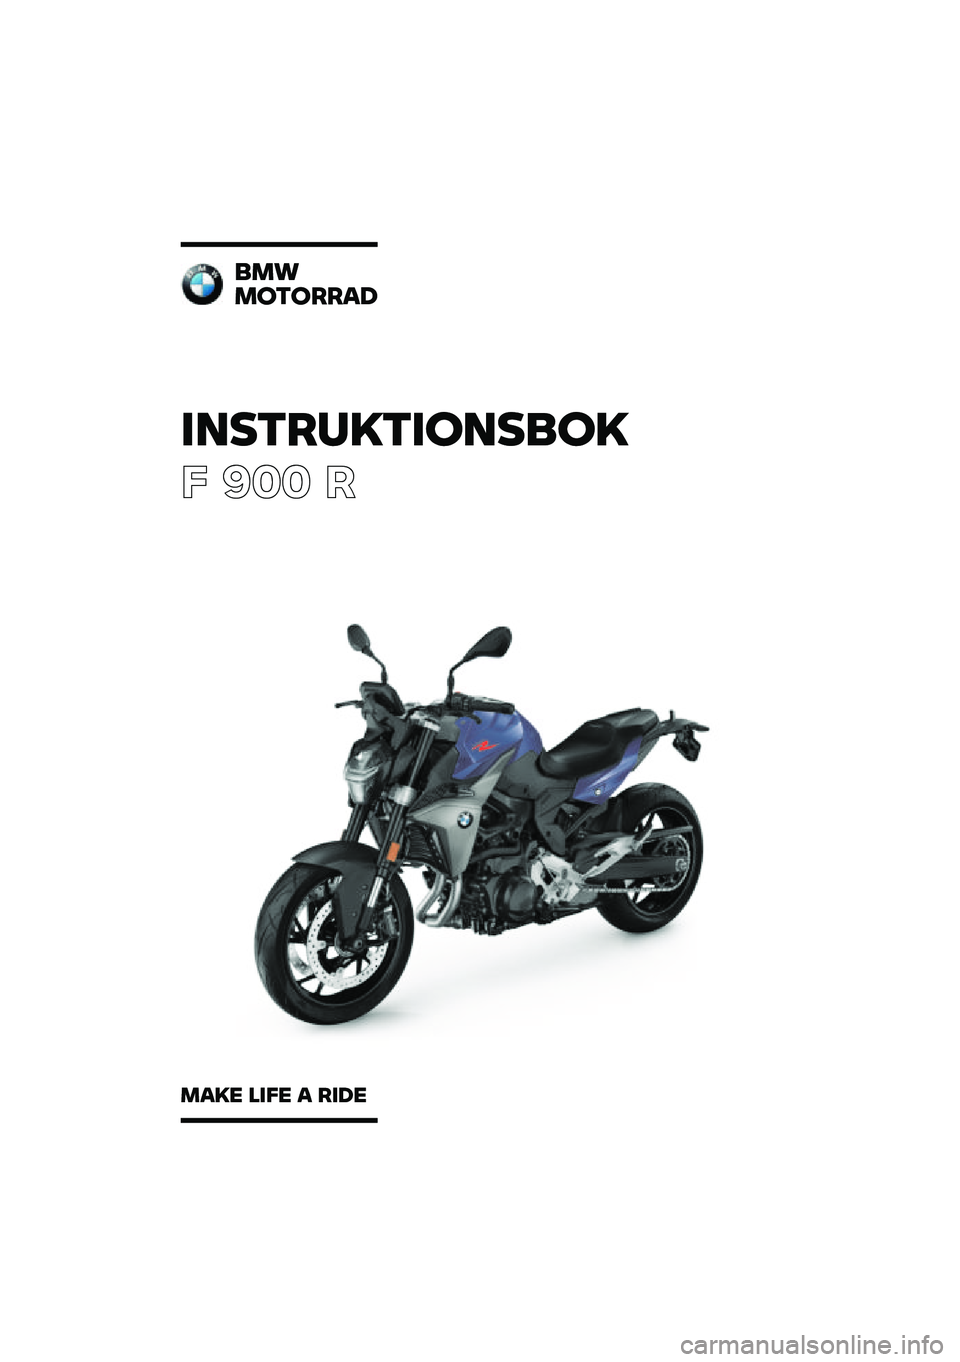 BMW MOTORRAD F 900 R 2020  Instruktionsbok (in Swedish) �������\b���	���
�	�\b
� ��� �
�
��\f
��	��	���
�
��
�\b� ���� �
 ���� 